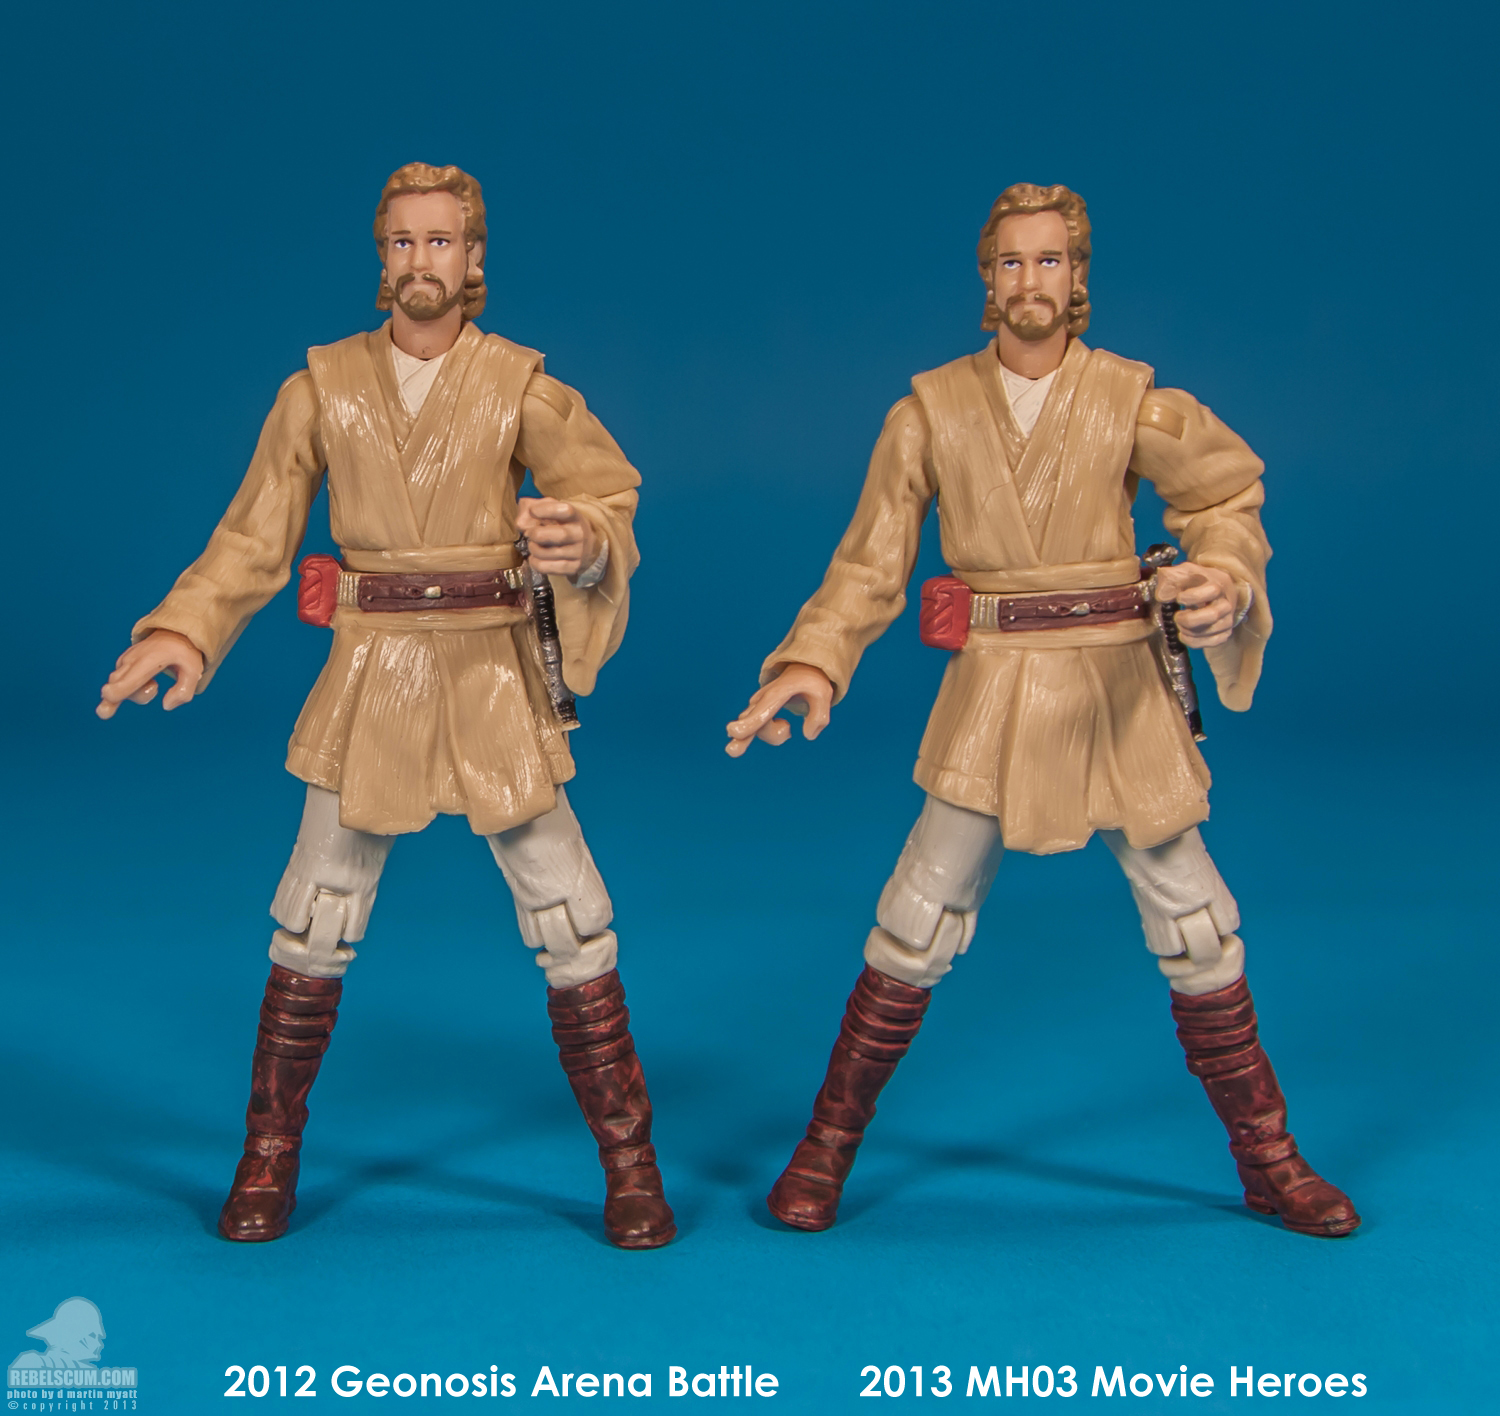 MH03_2013_Obi-Wan_Kenobi_Movie_Heroes_Star_Wars-10.jpg